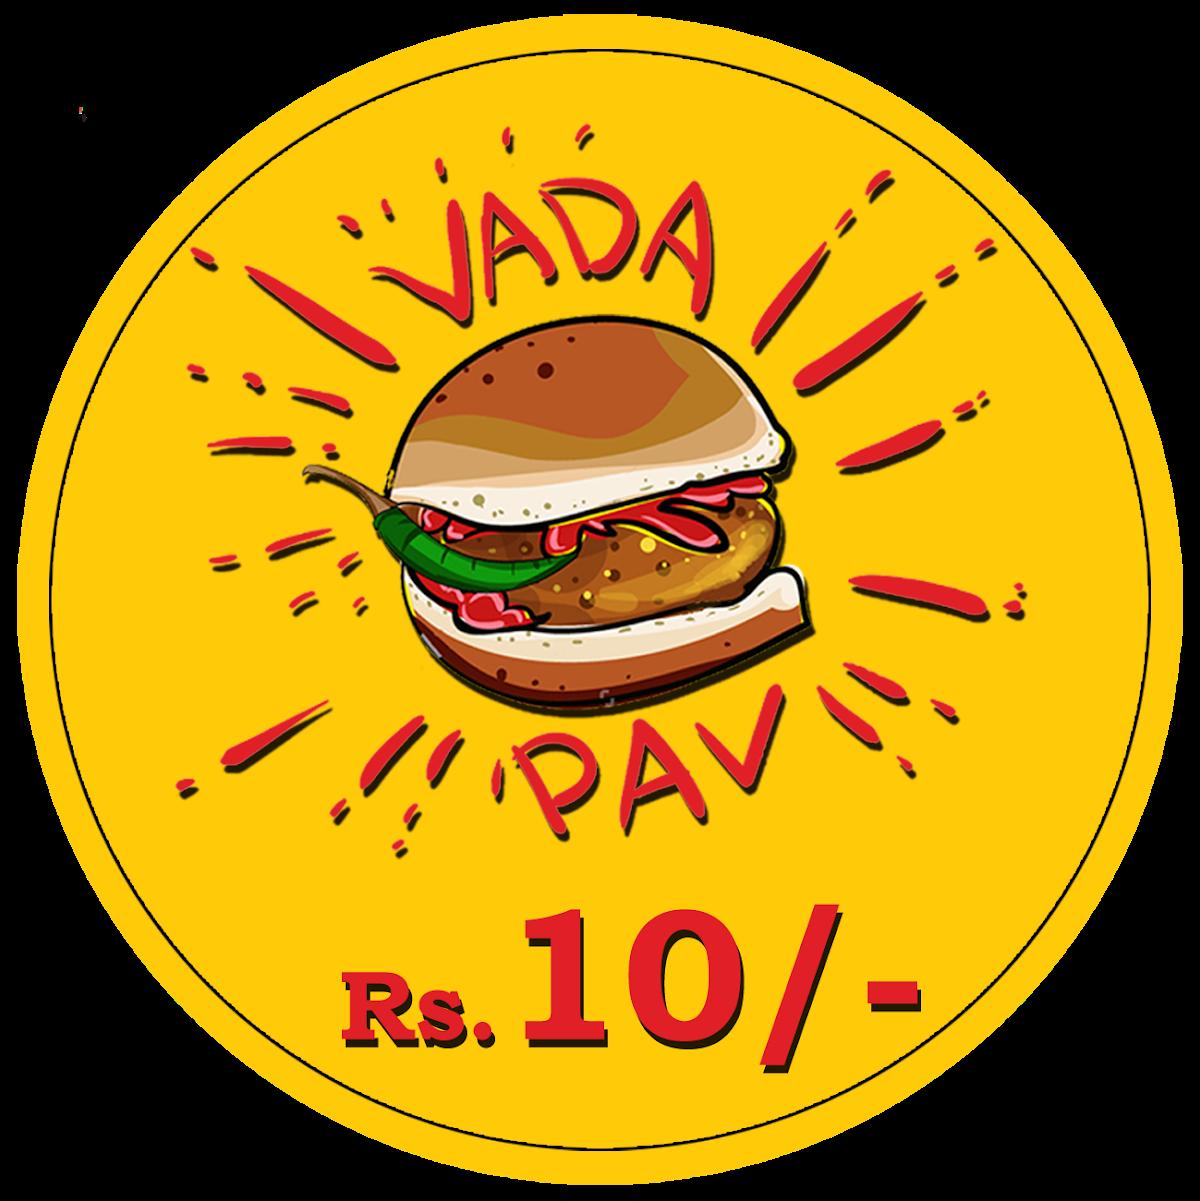 House of Vada pav, Mumbai - Restaurant menu and reviews